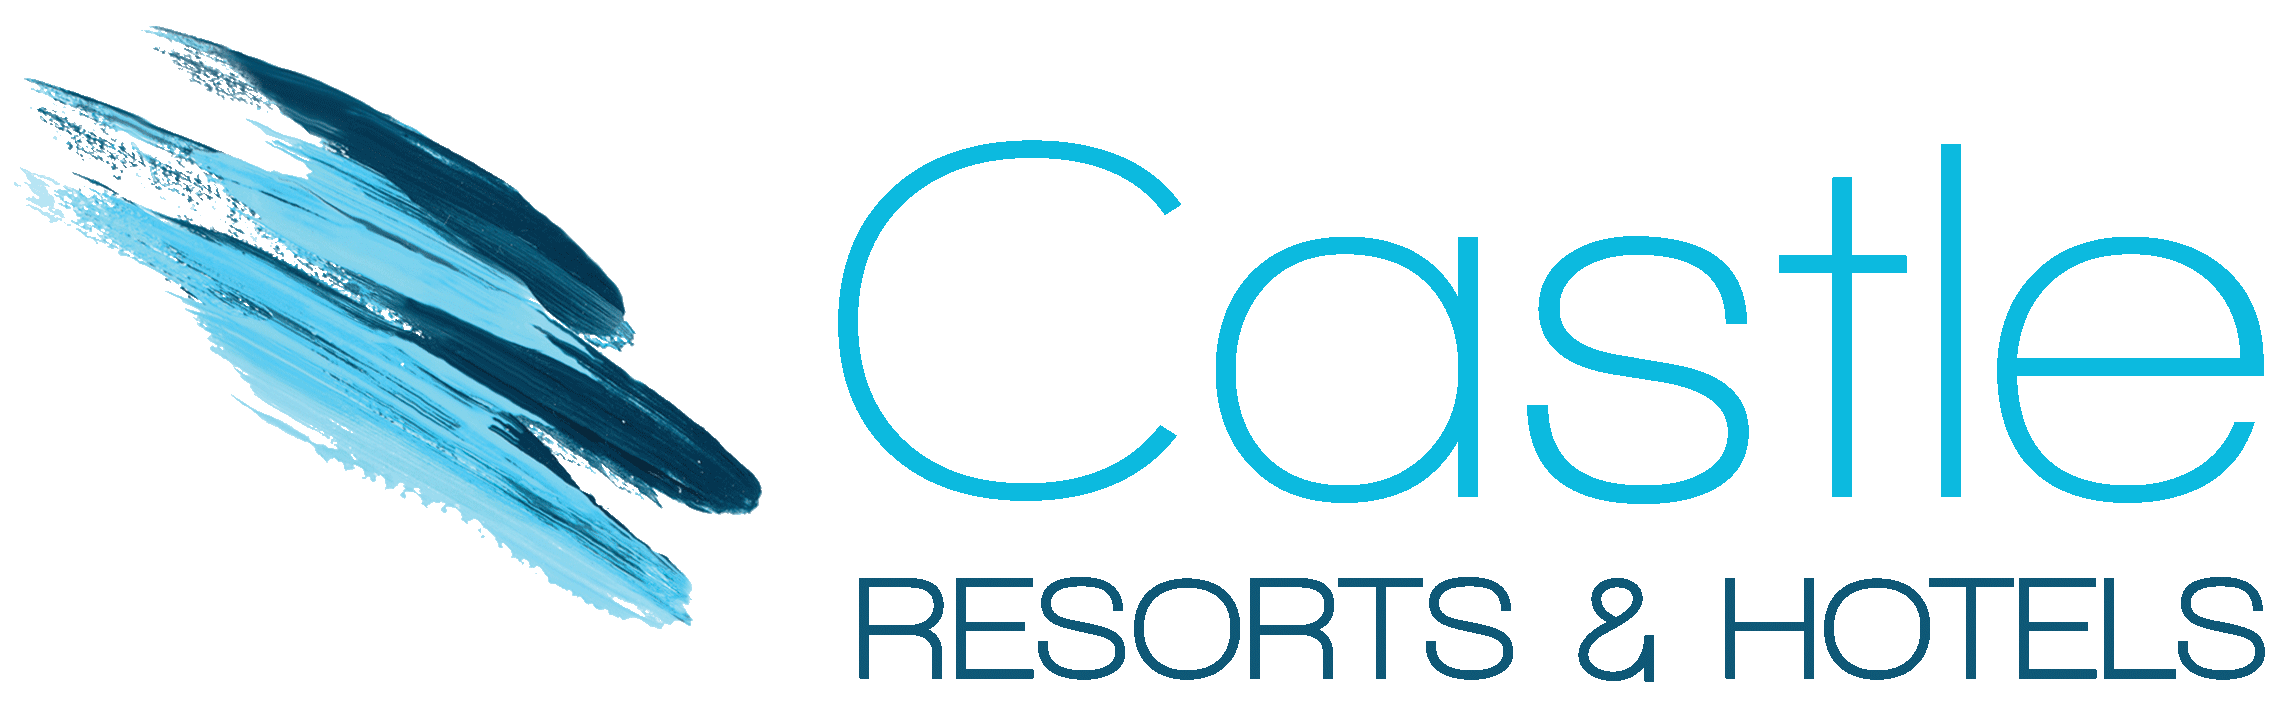  Castle Resorts logo
		                        